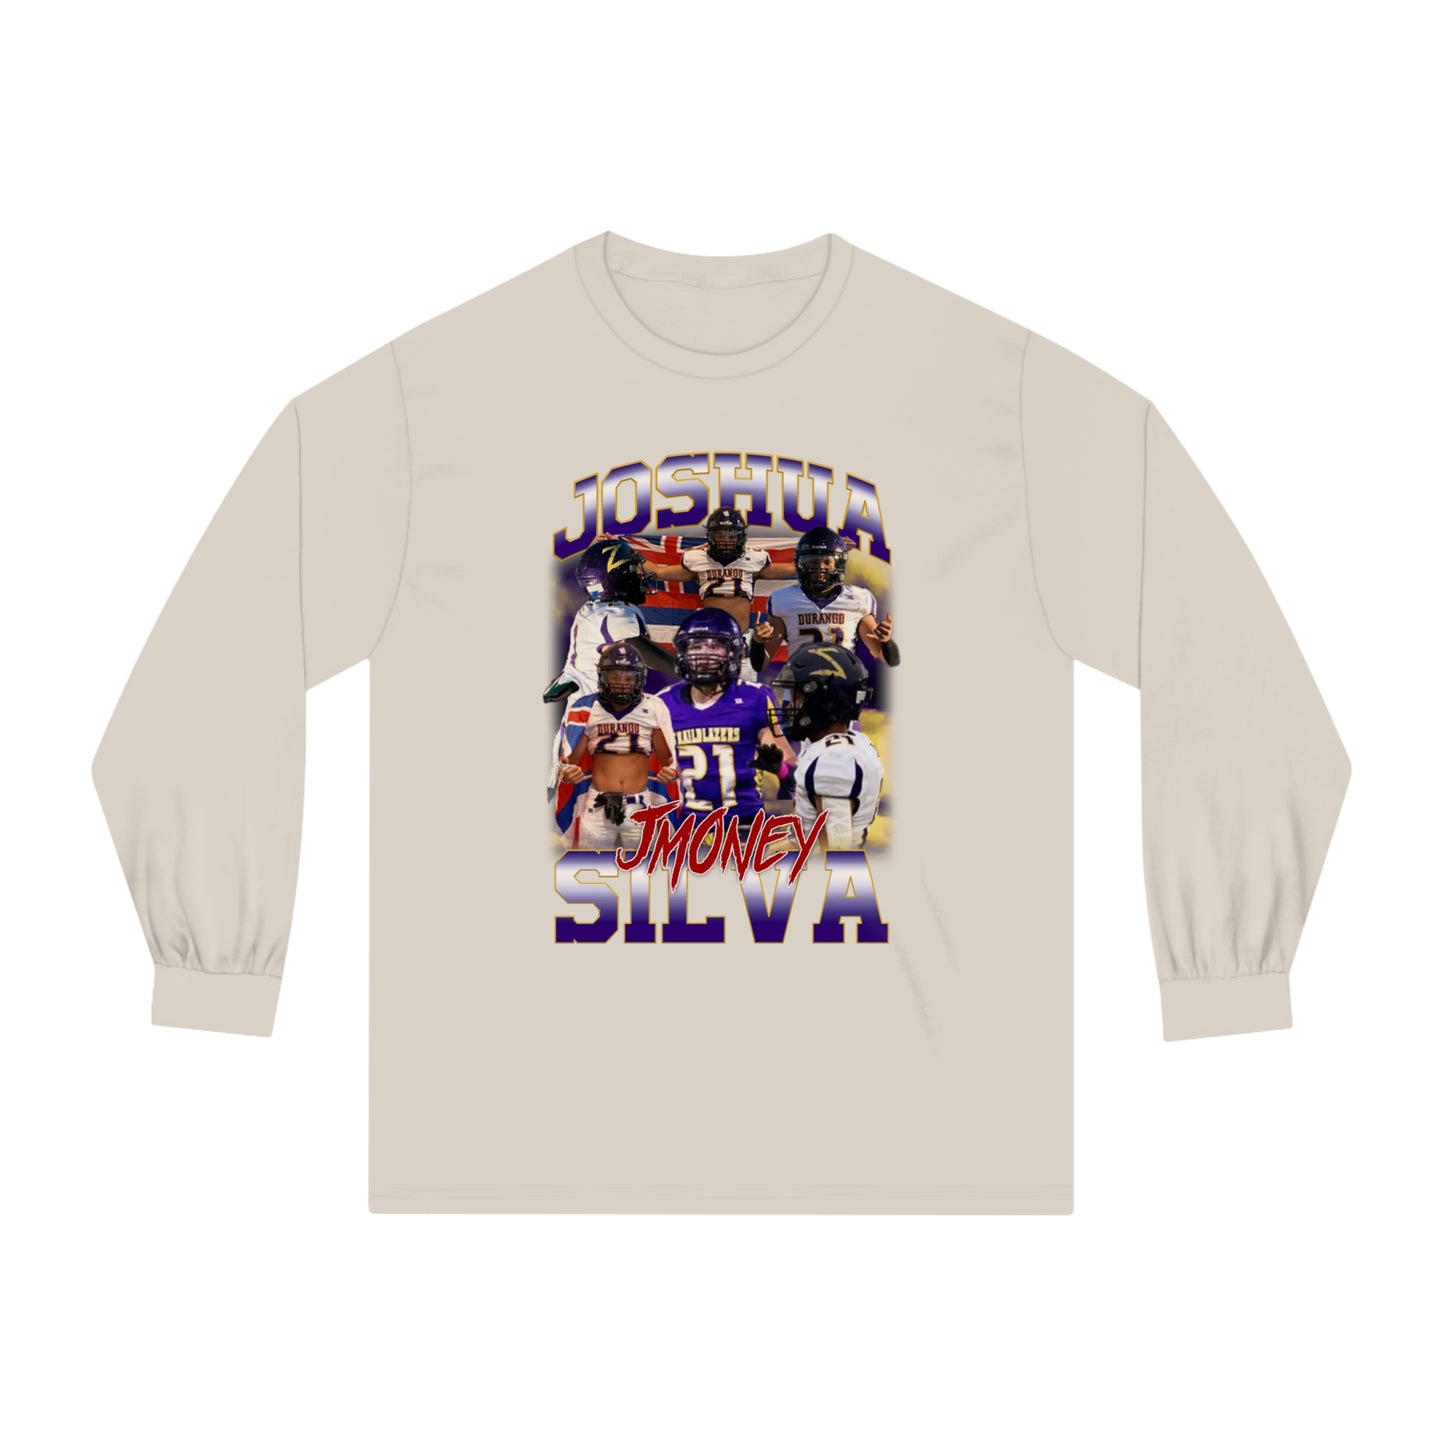 Joshua Silva Long Sleeve T-Shirt